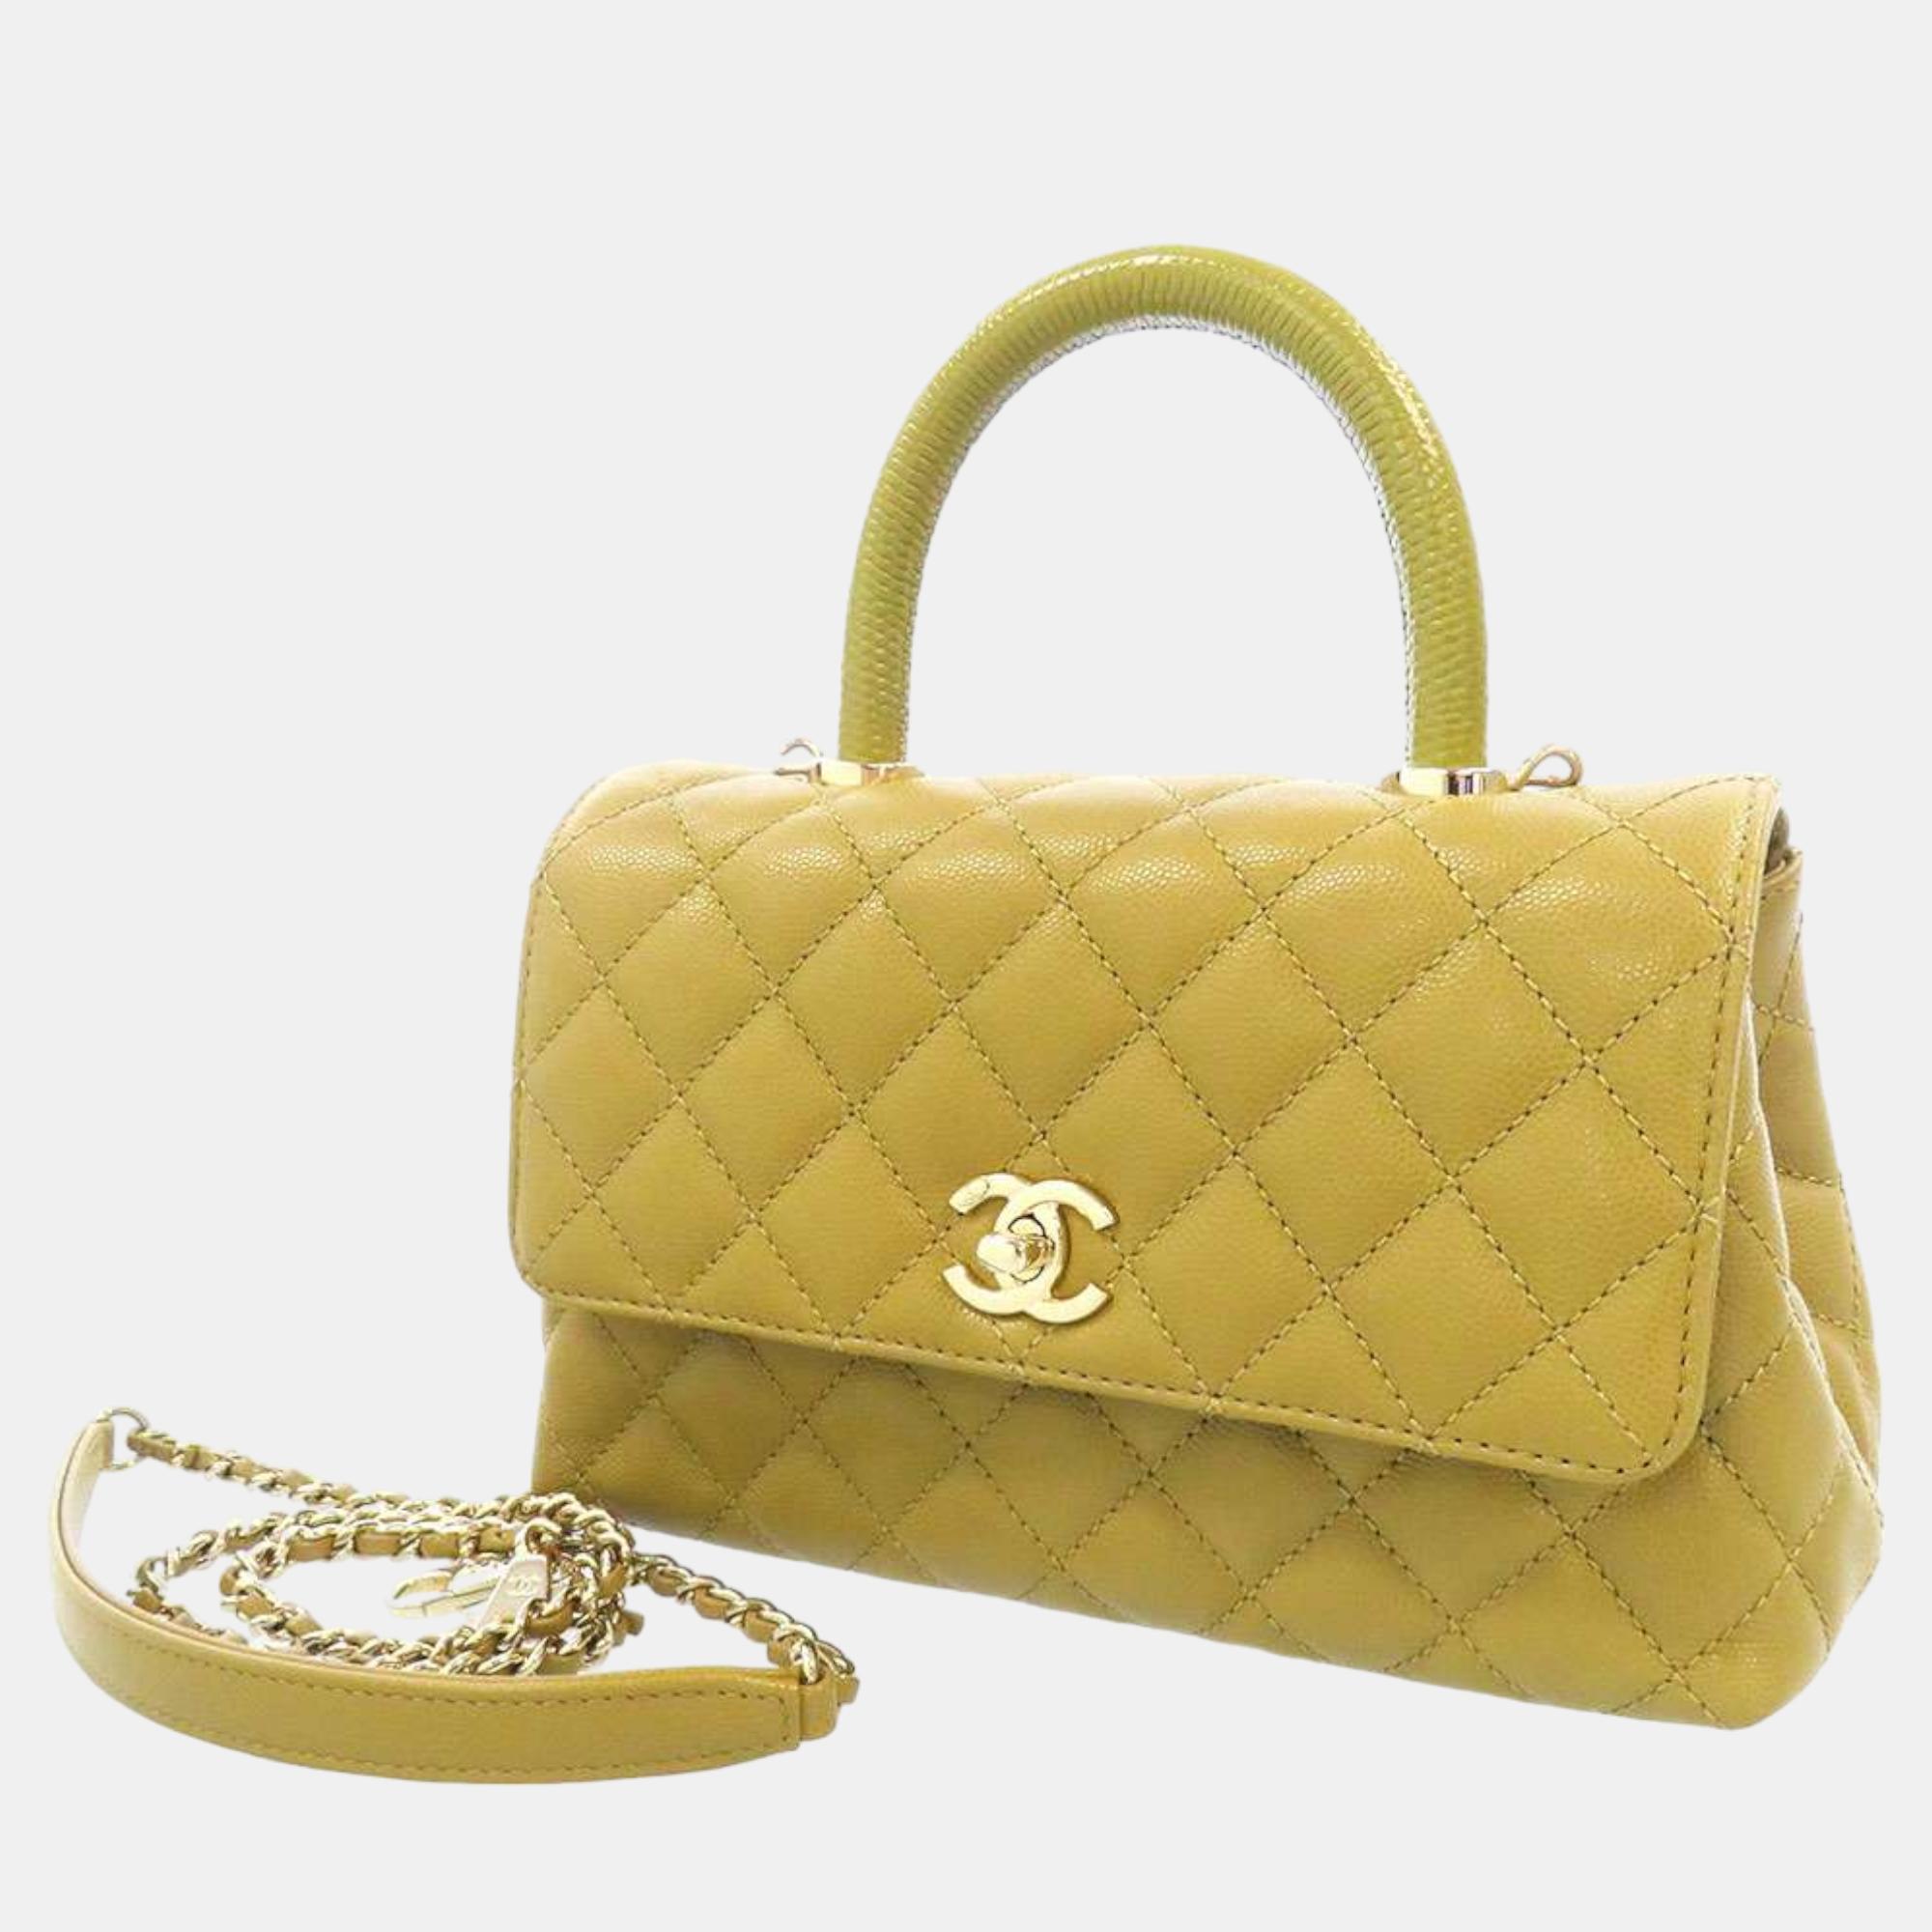 Chanel Yellow Caviar Leather Coco Top Handle Bag